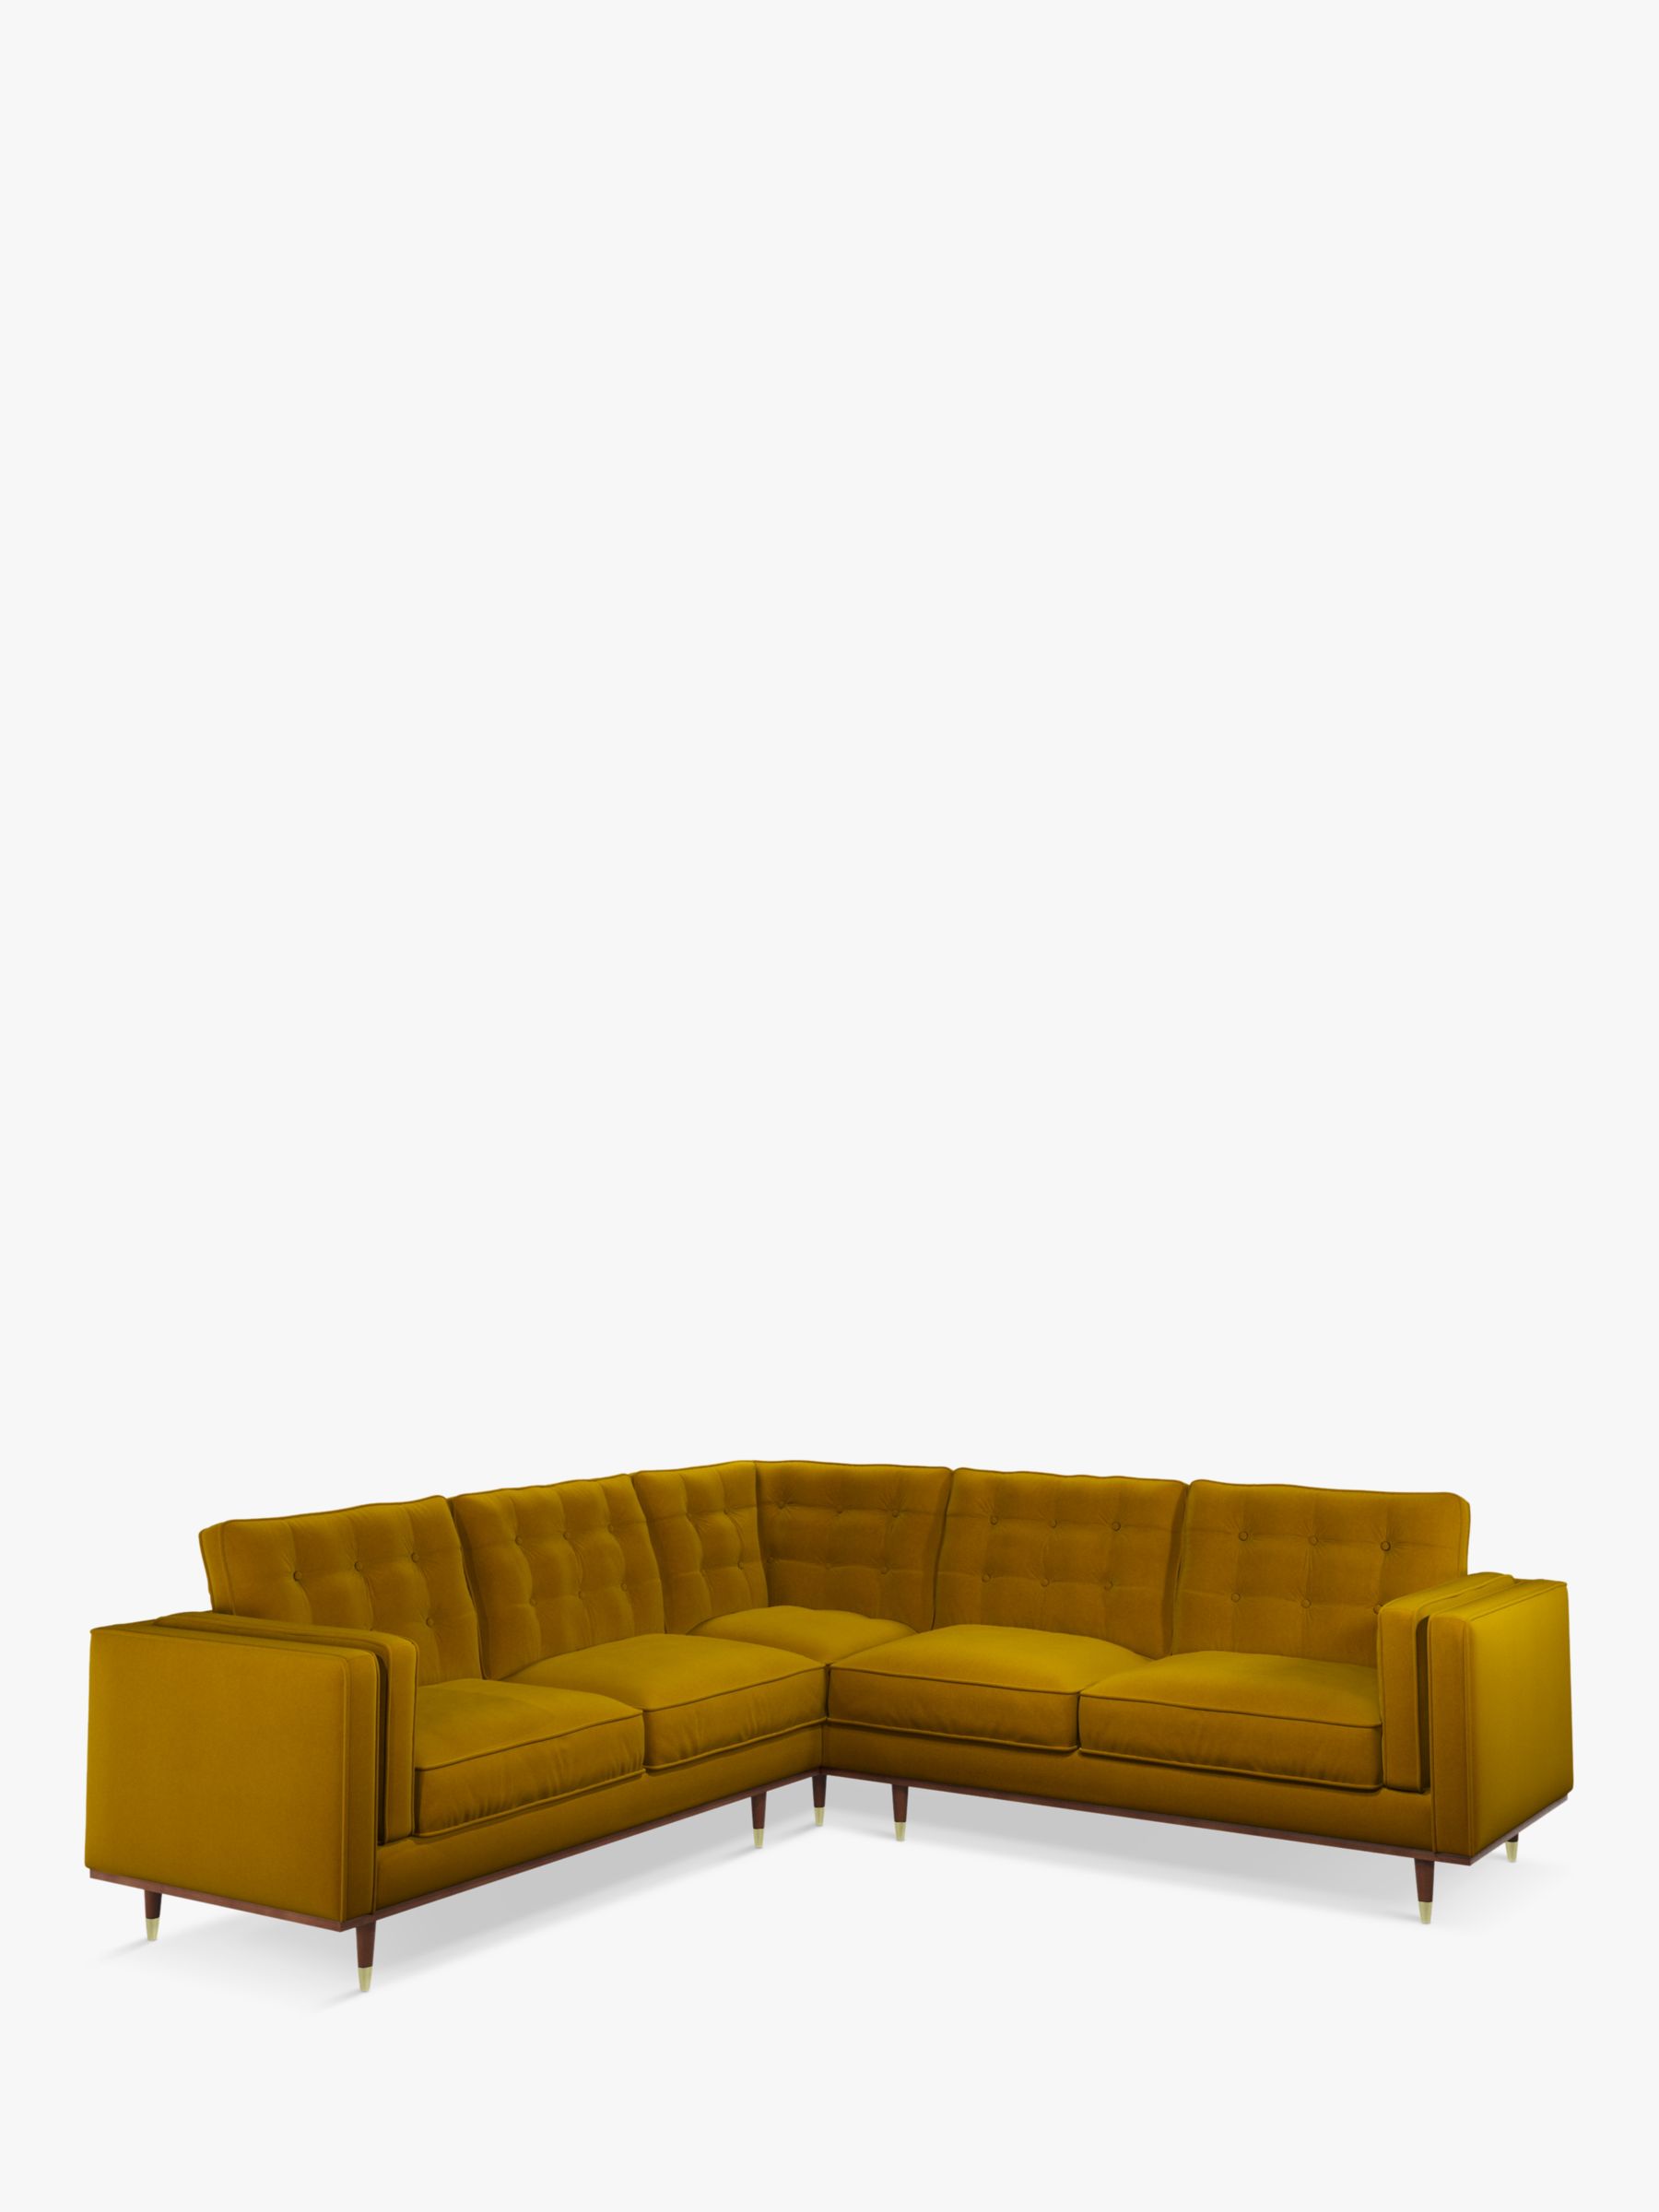 Lyon Range, John Lewis + Swoon Lyon Grand 5 Seater Sofa, Dark Leg, Turmeric Velvet